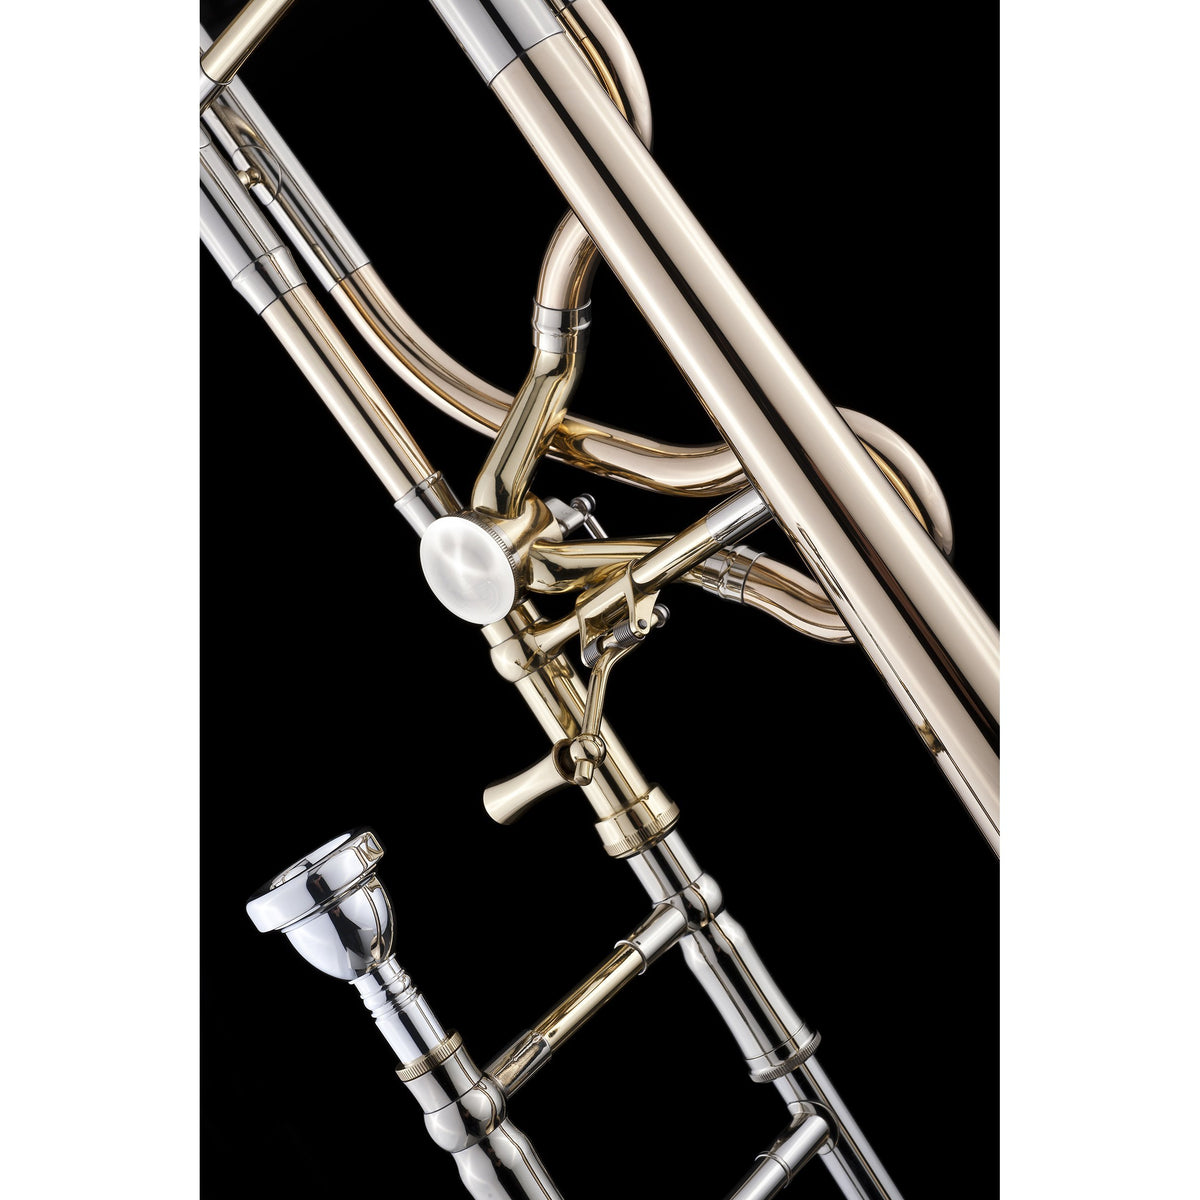 Schagerl - Meisterinstrumente - Fontana Tenor Bb/F Trombones-Trombone-Schagerl-Music Elements